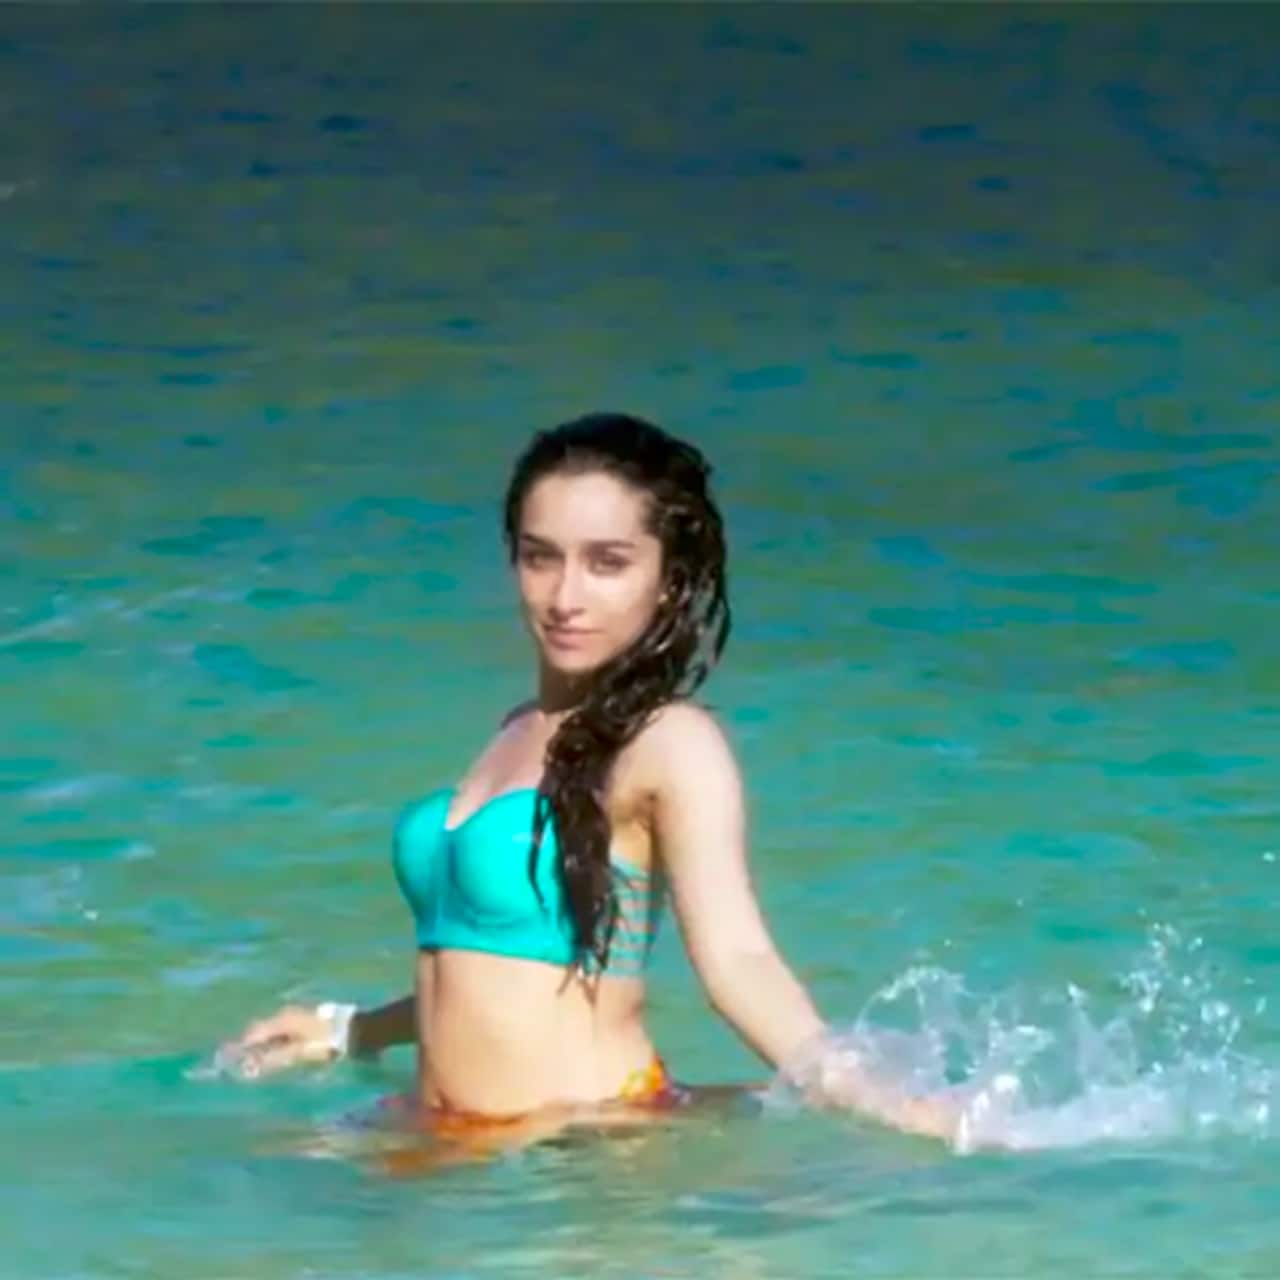 Shraddha Kapoor Looks Stunning In These Throwback Bikini Pics